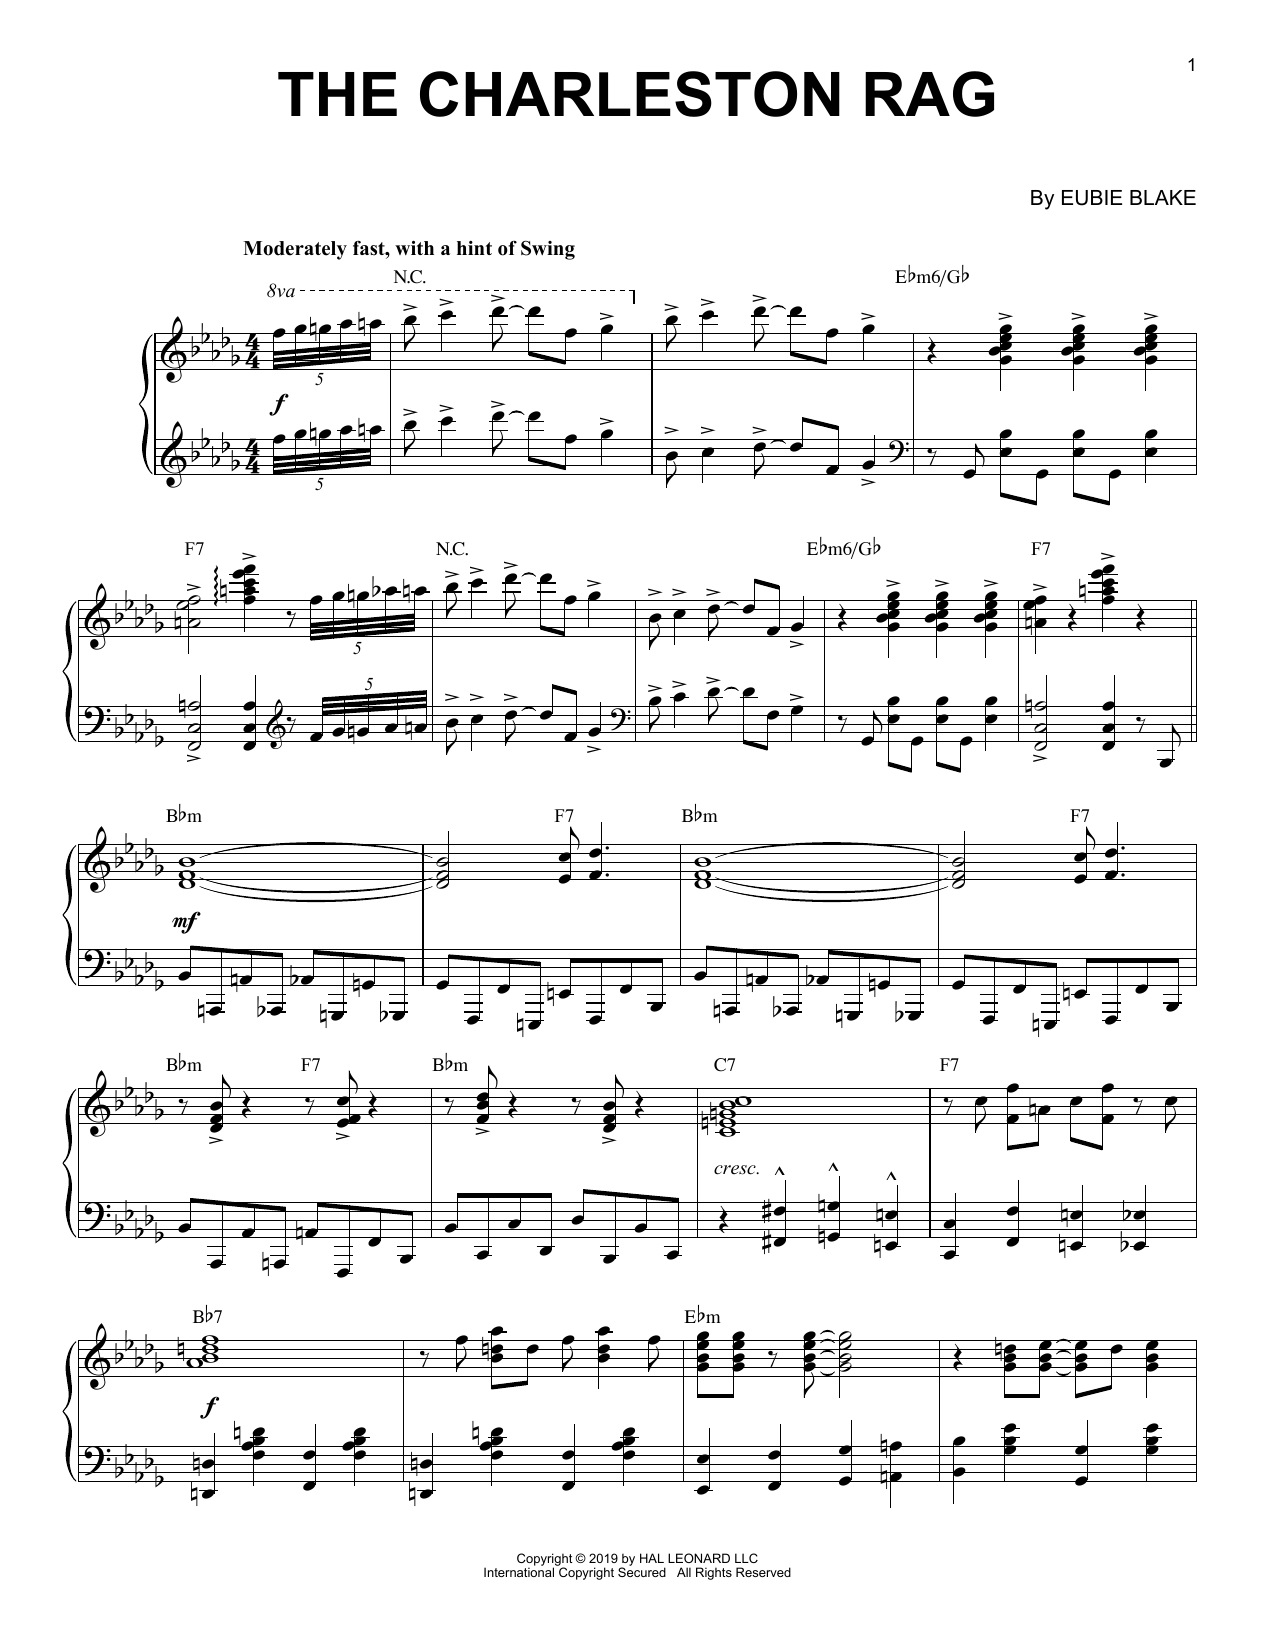 Eubie Blake The Charleston Rag [Jazz version] Sheet Music Notes & Chords for Piano Solo - Download or Print PDF